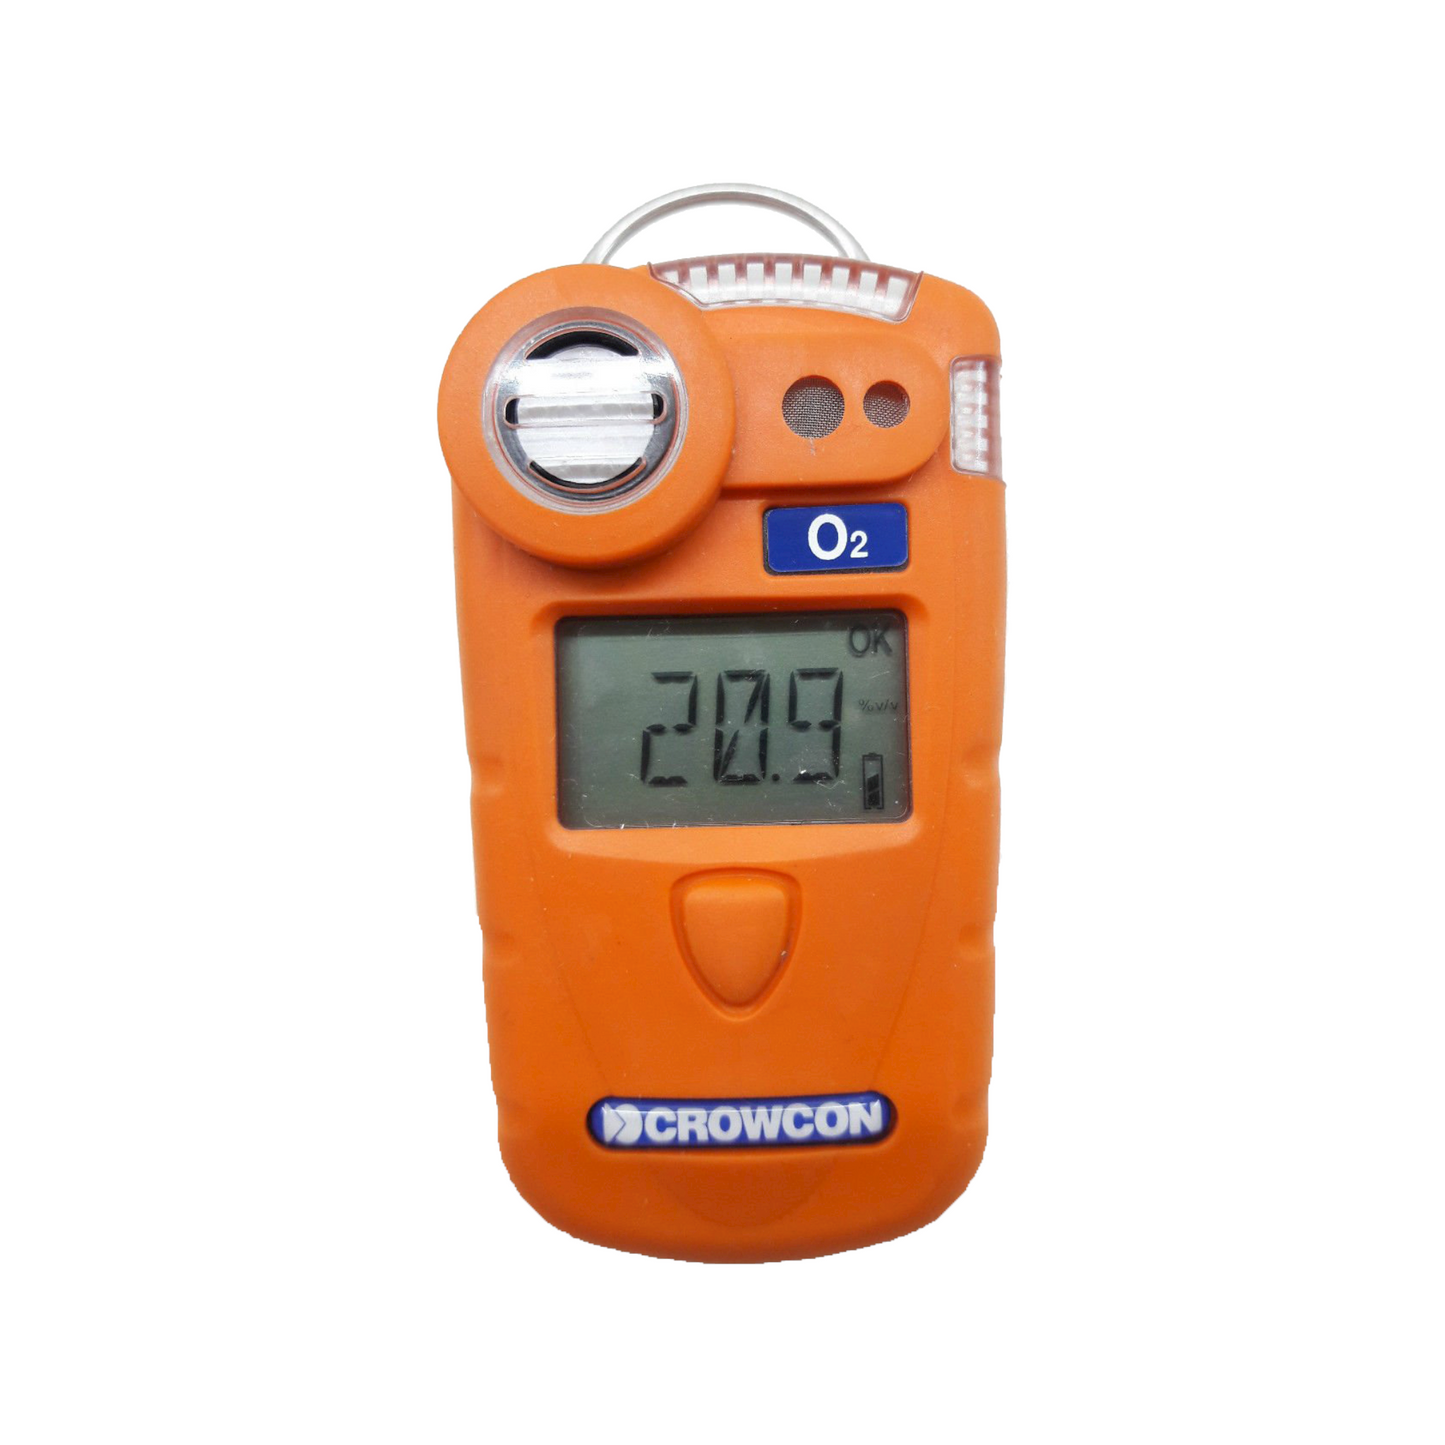 Gasman - Chlorine dioxide gas detector